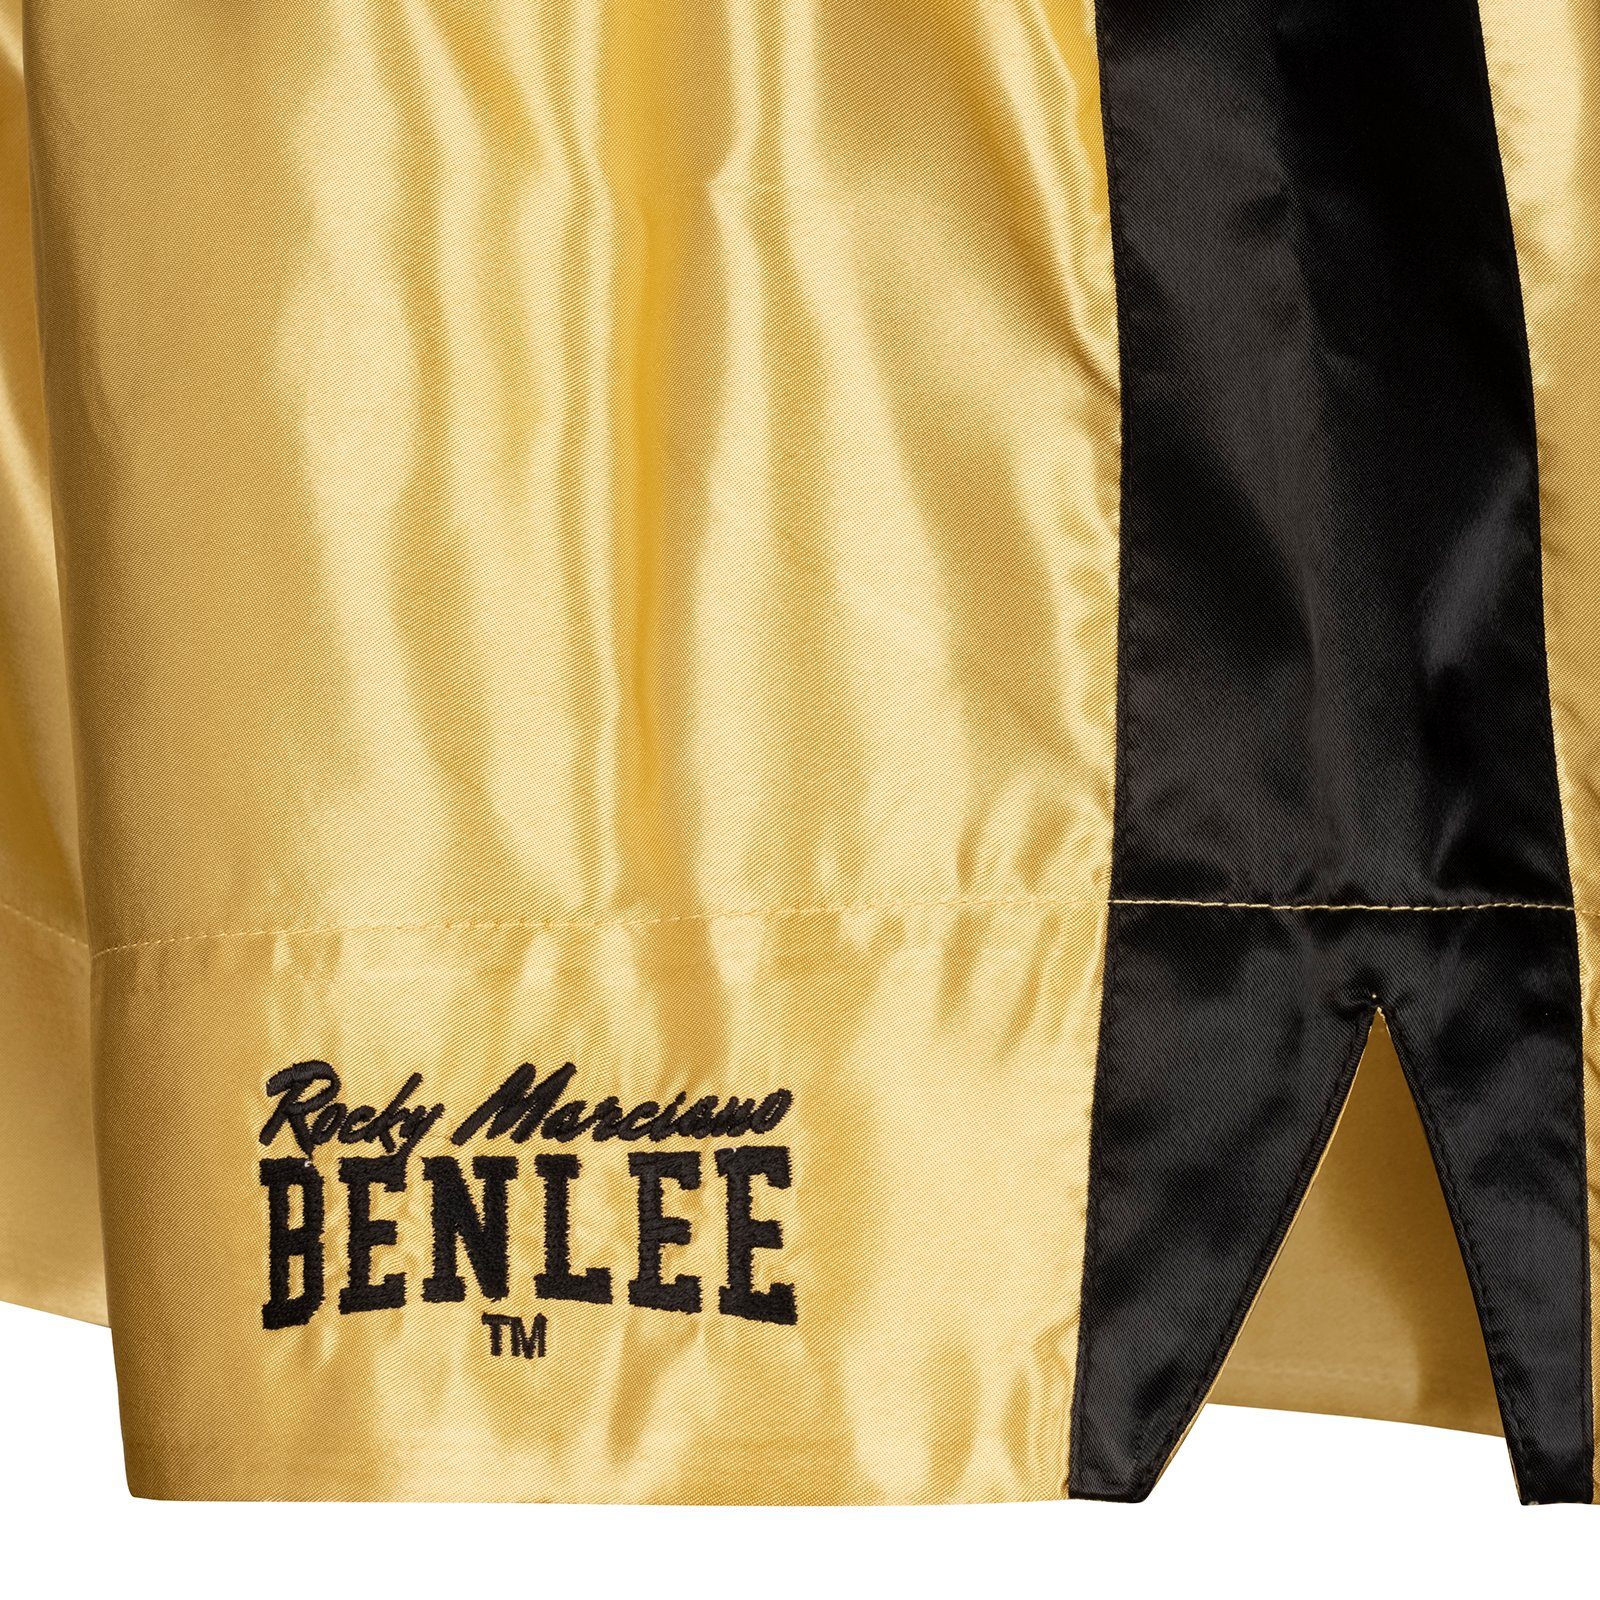 Boxshorts Rocky gold/black Herren Benlee Marciano Benlee Goldy Thai Sporthose